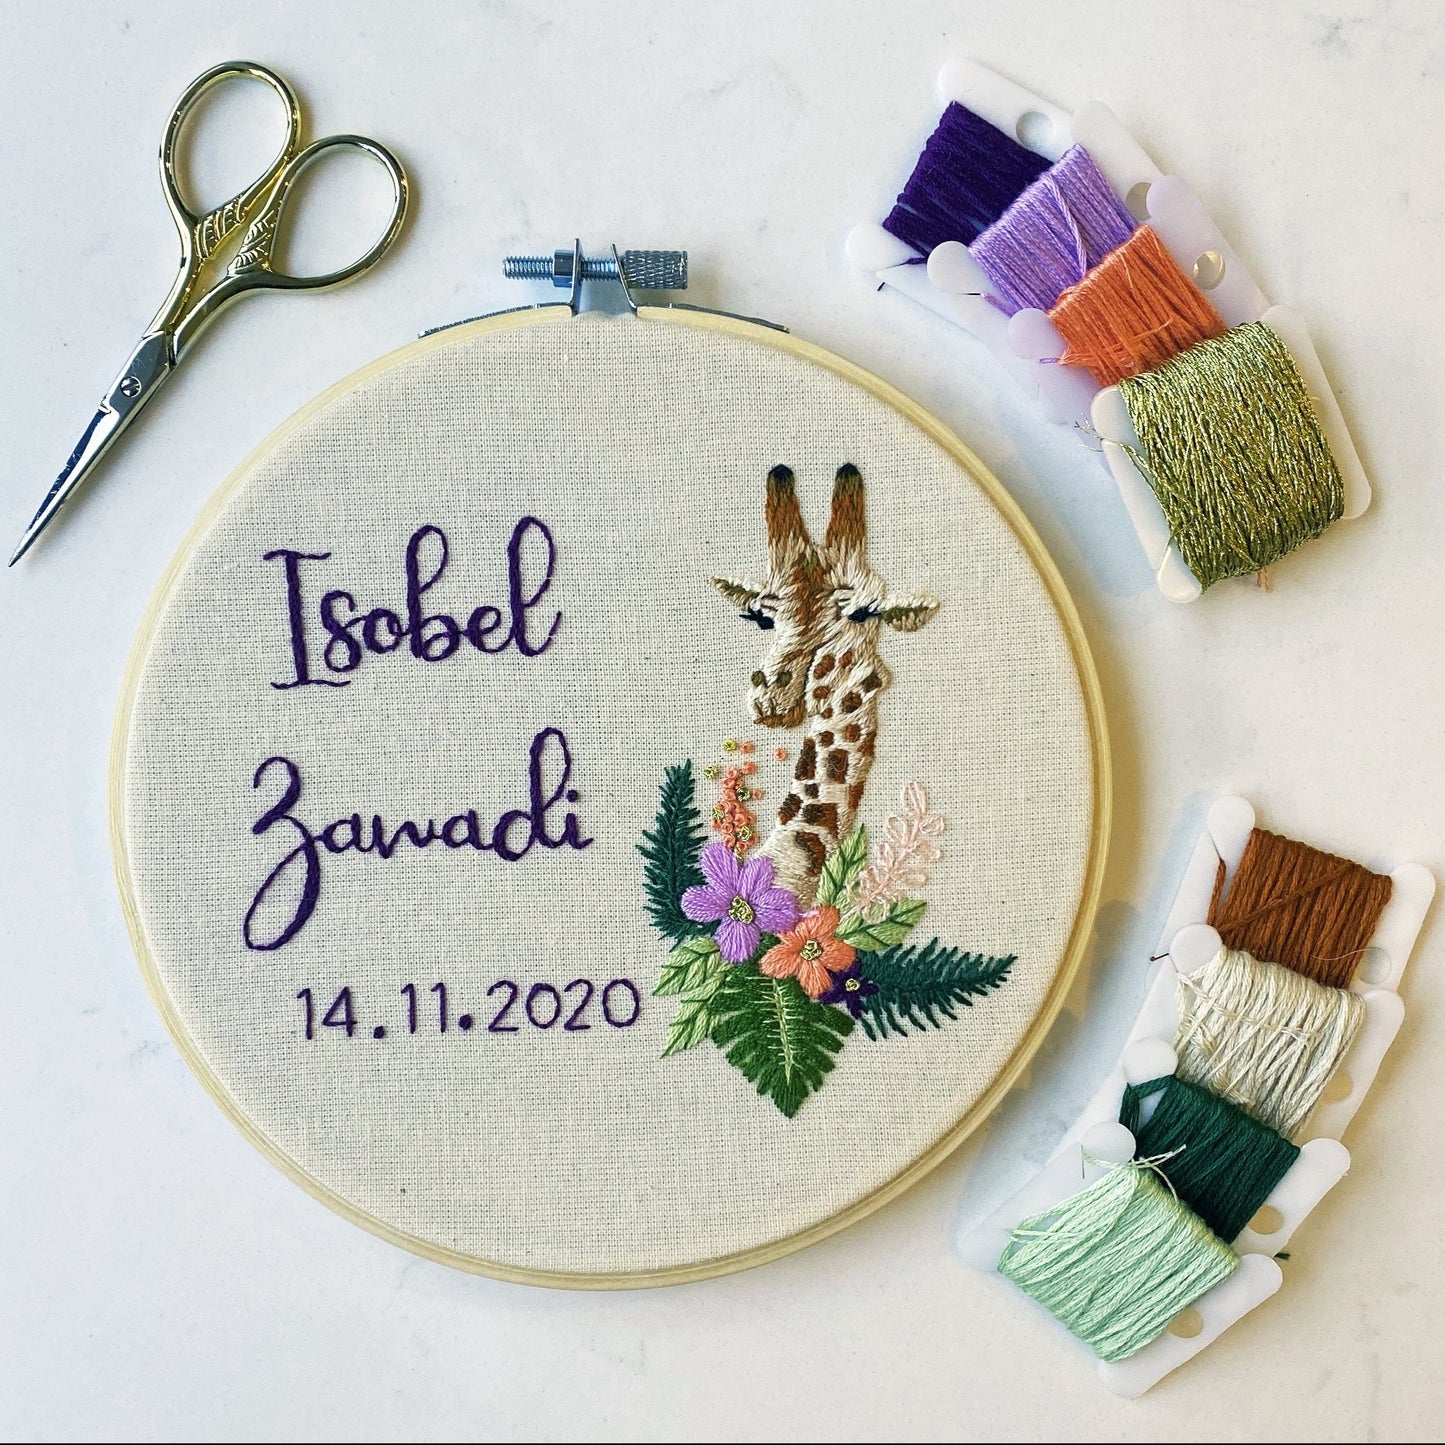 Giraffe embroidery hoop